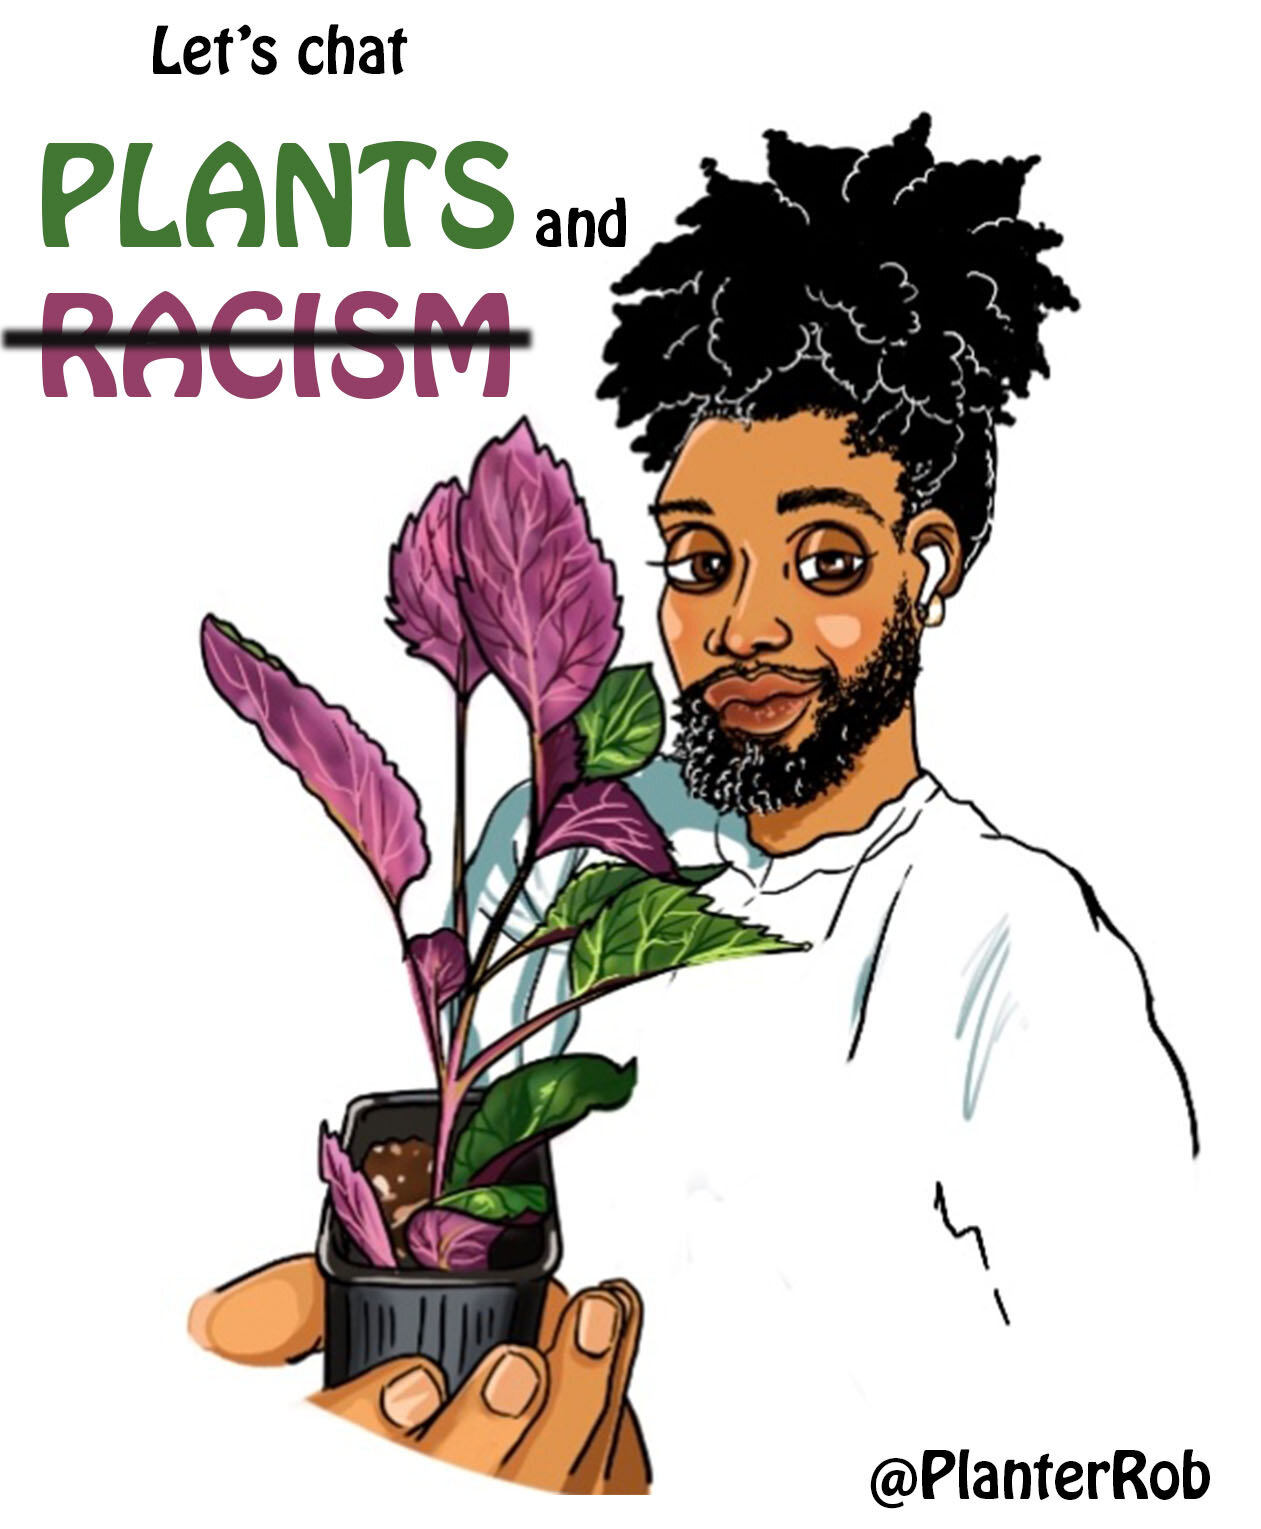 Planter Rob